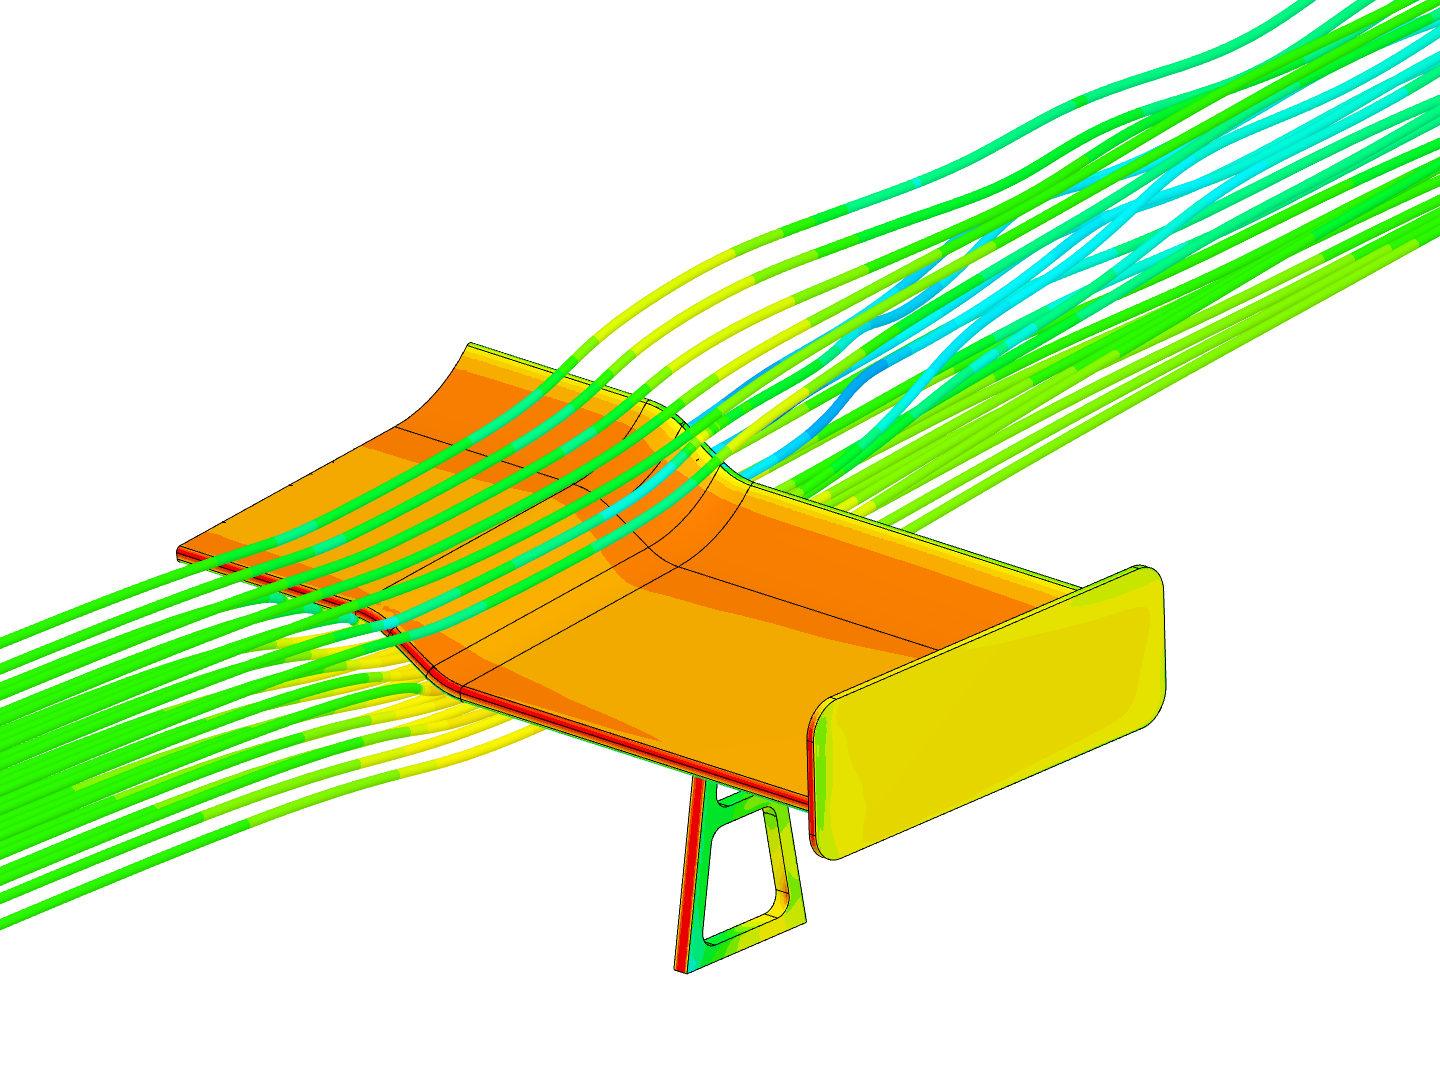 Airflow analysis around a gt car spoiler 123 image